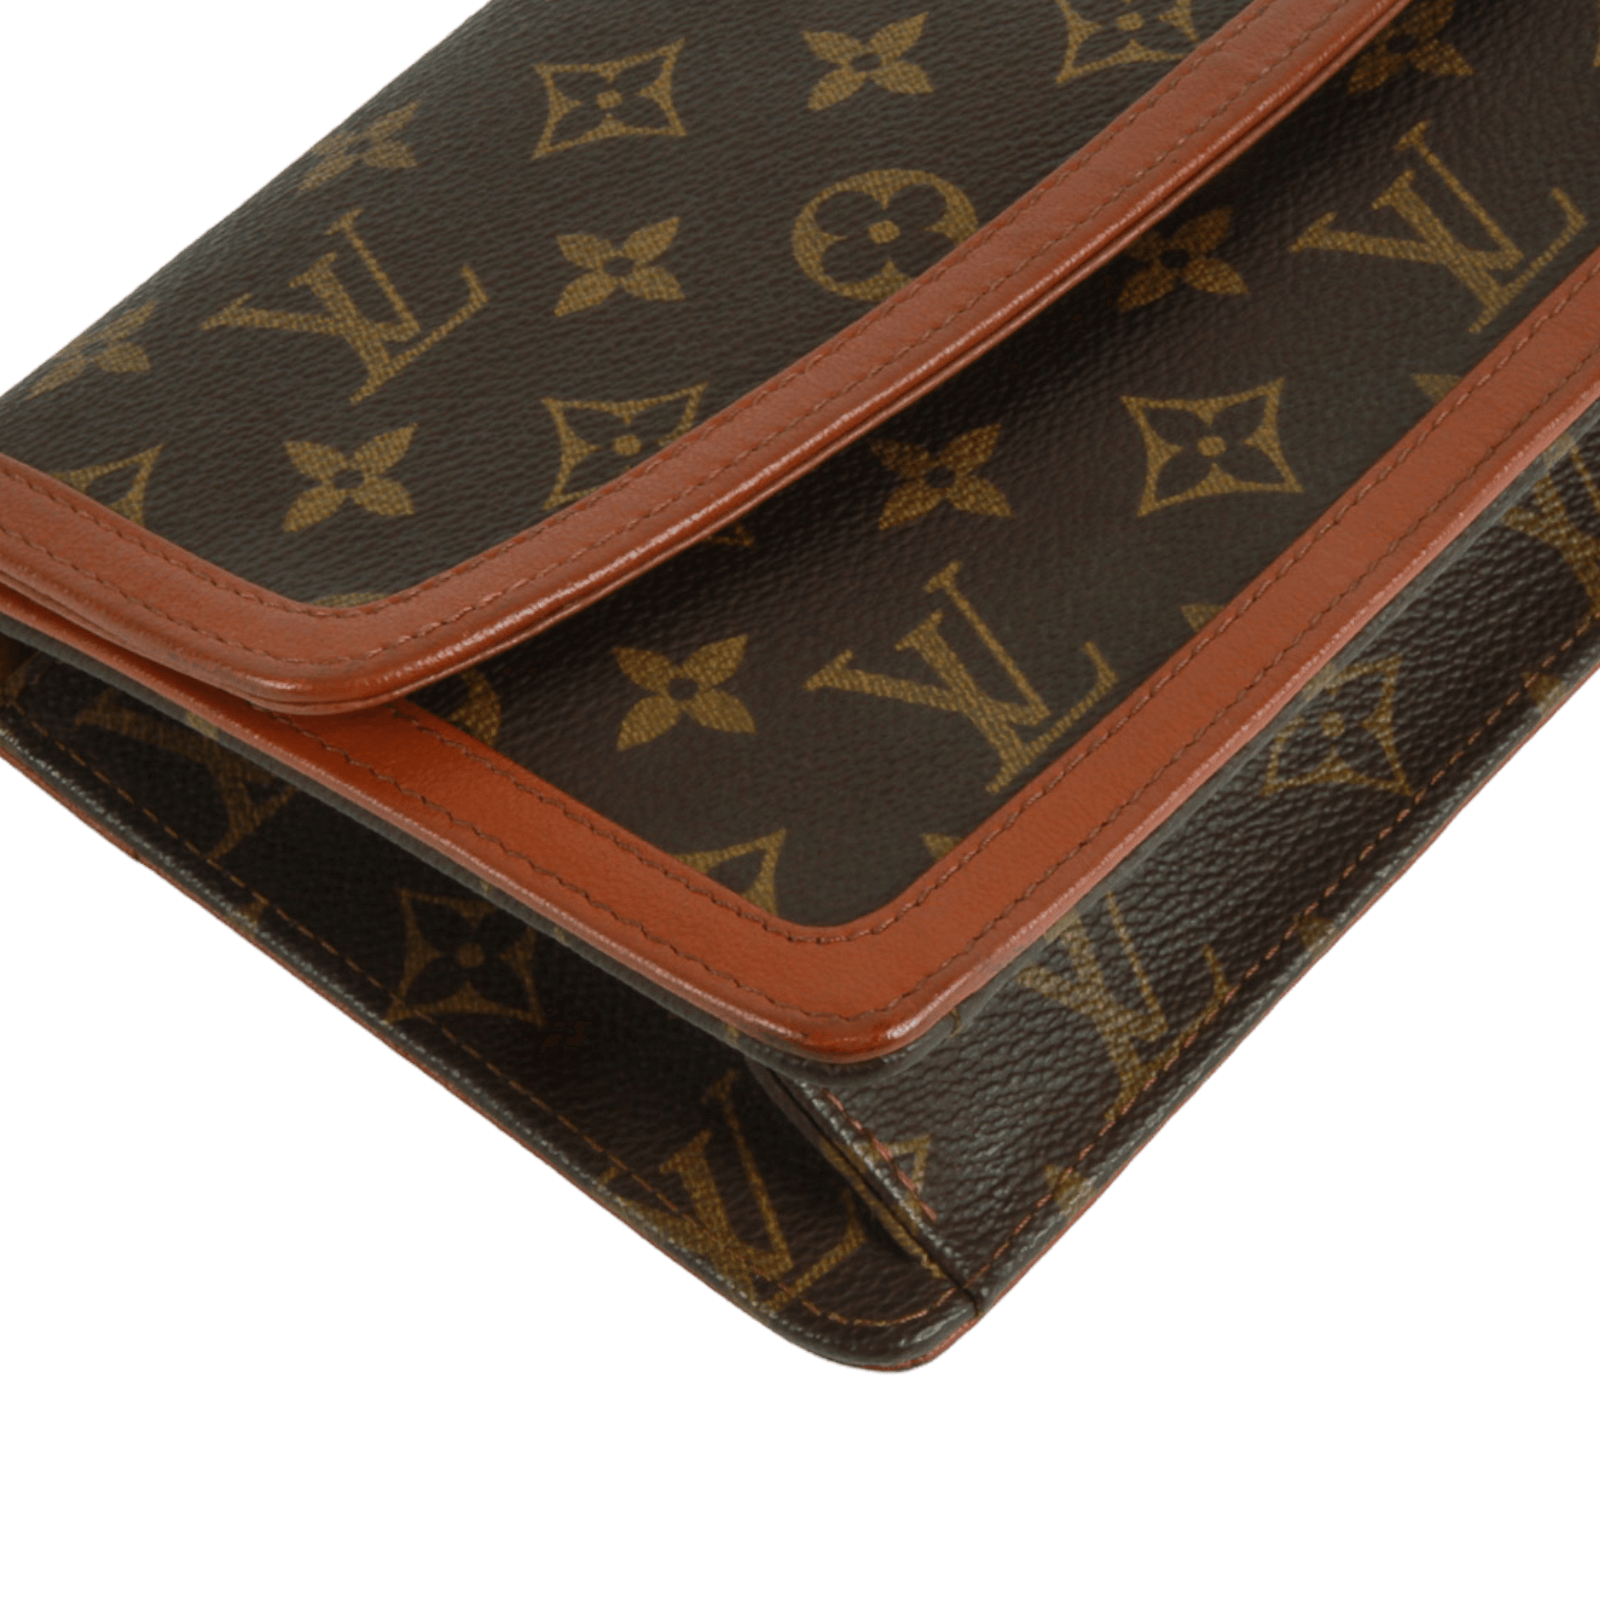 LV x YK Félicie Pochette Monogram - Women - Small Leather Goods